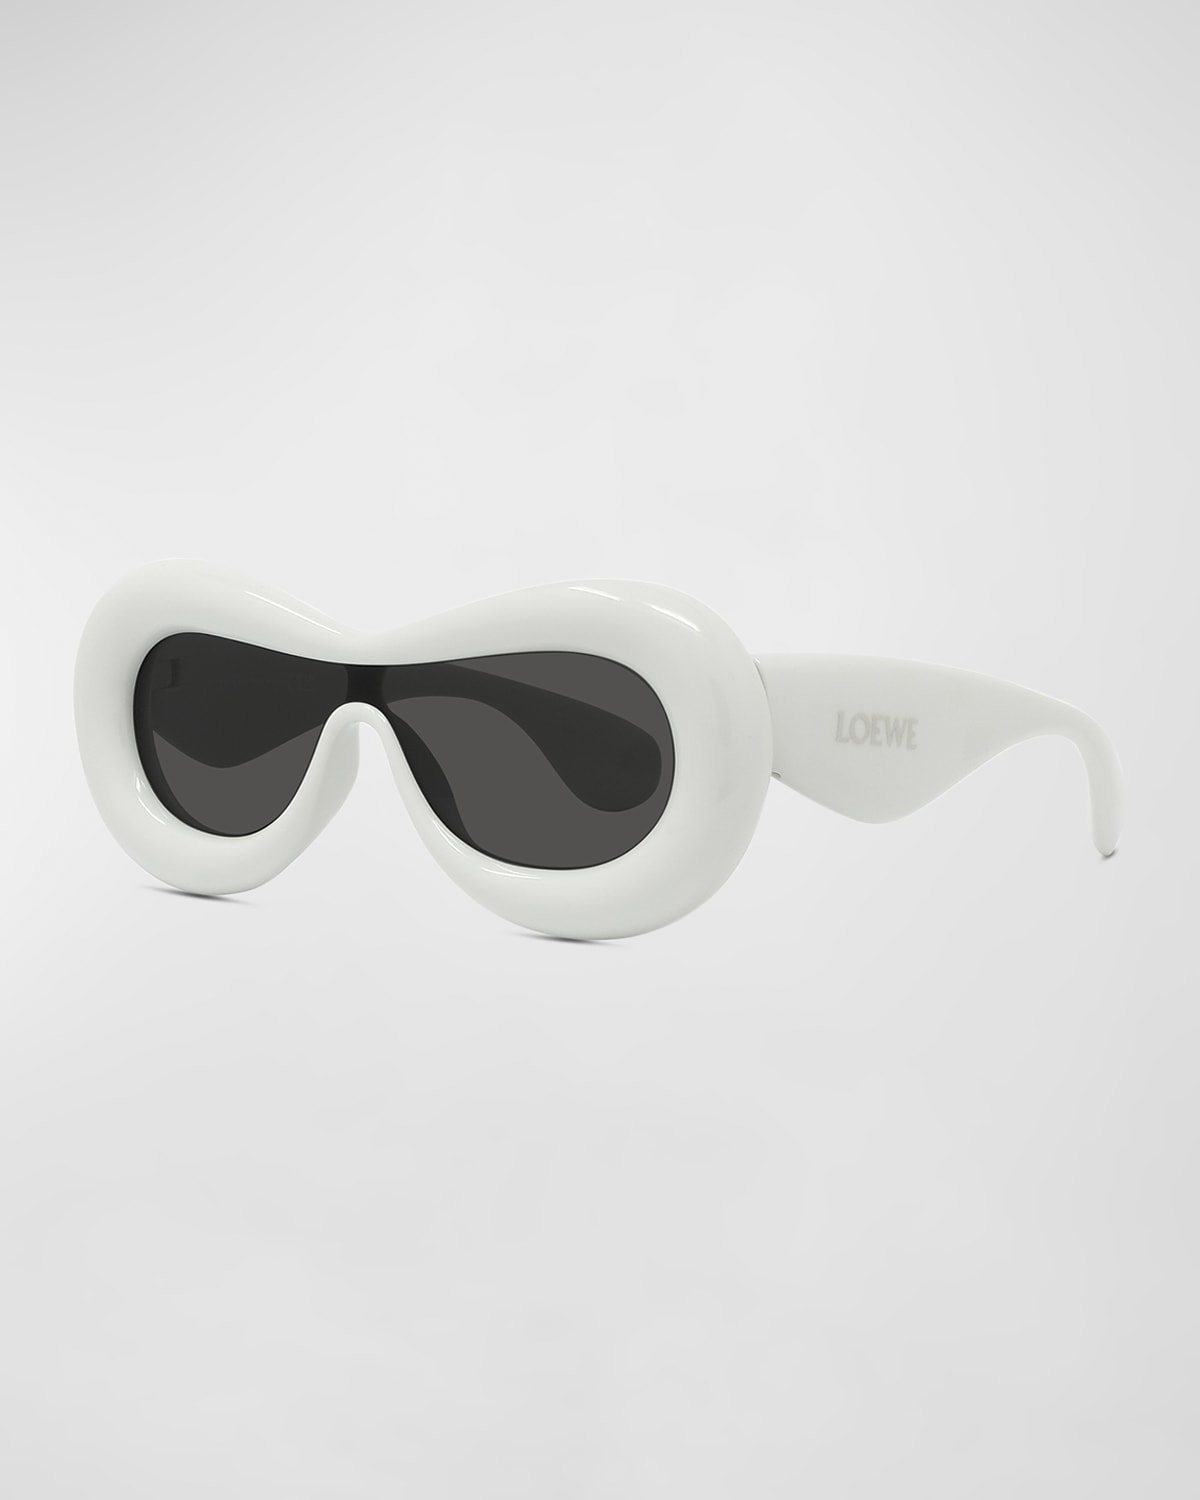 Loewe Inflated Injection Plastic Shield Sunglasses In Grey / Smoke